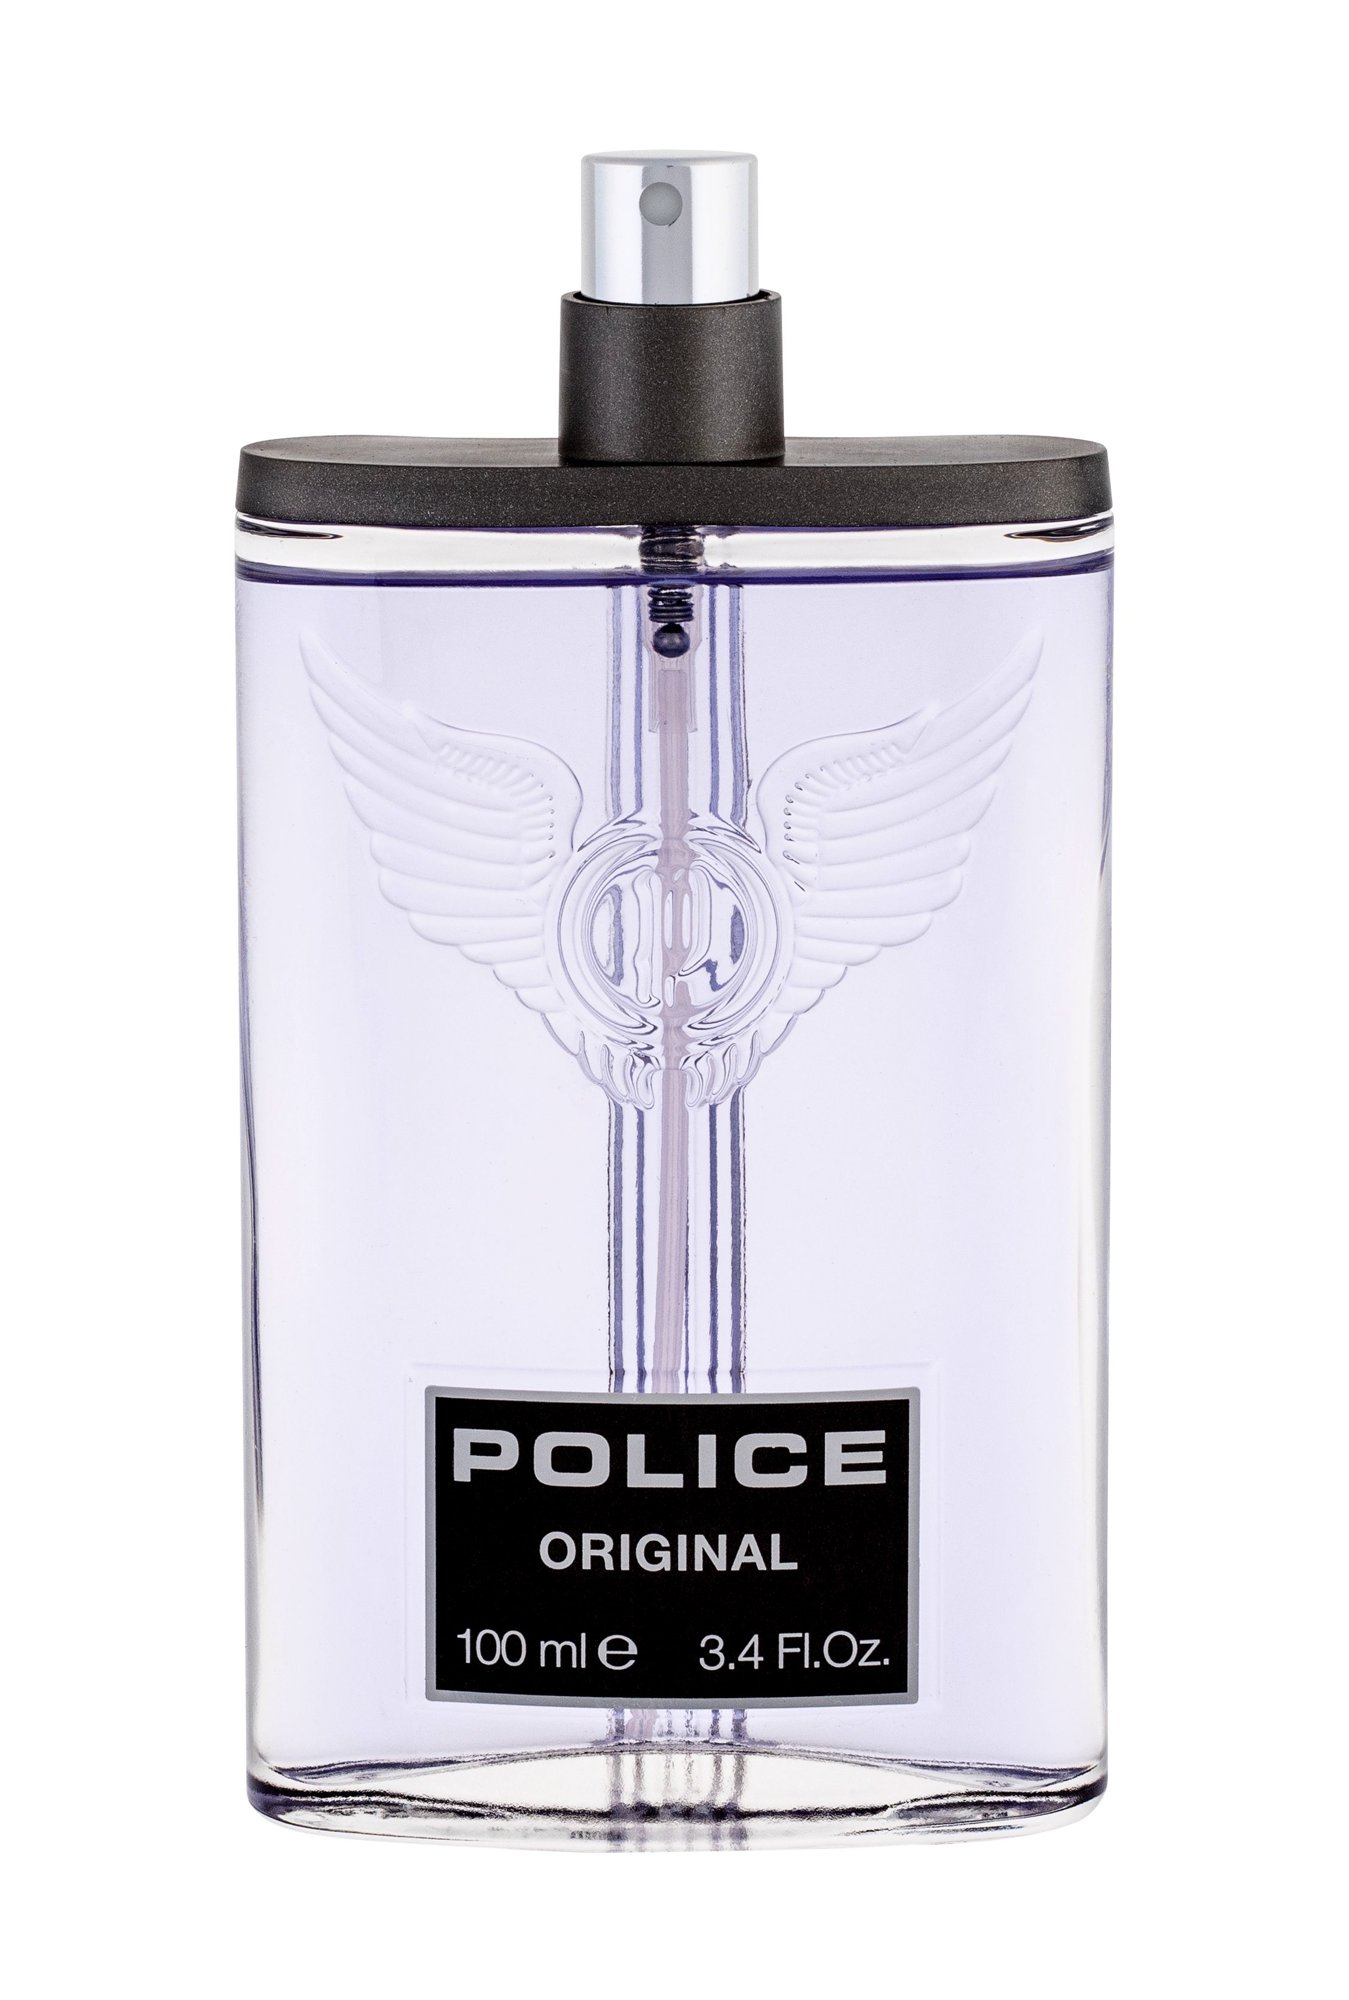 Police Original, Toaletní voda 100ml, Tester